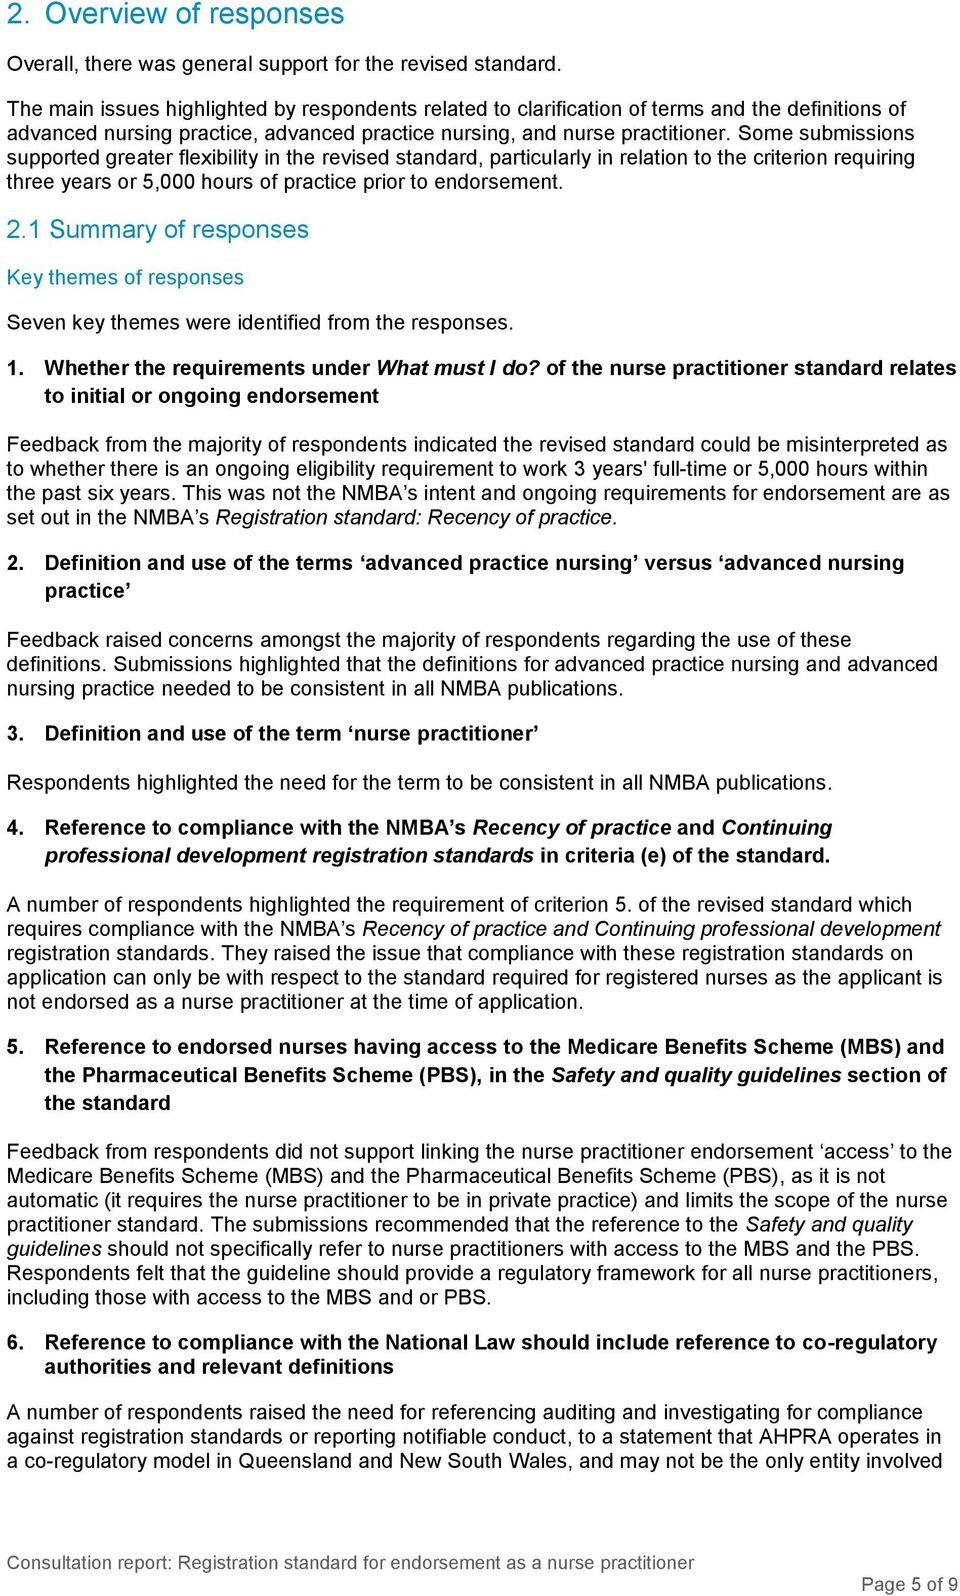 registration standard: endorsement as a nurse practitioner - pdf